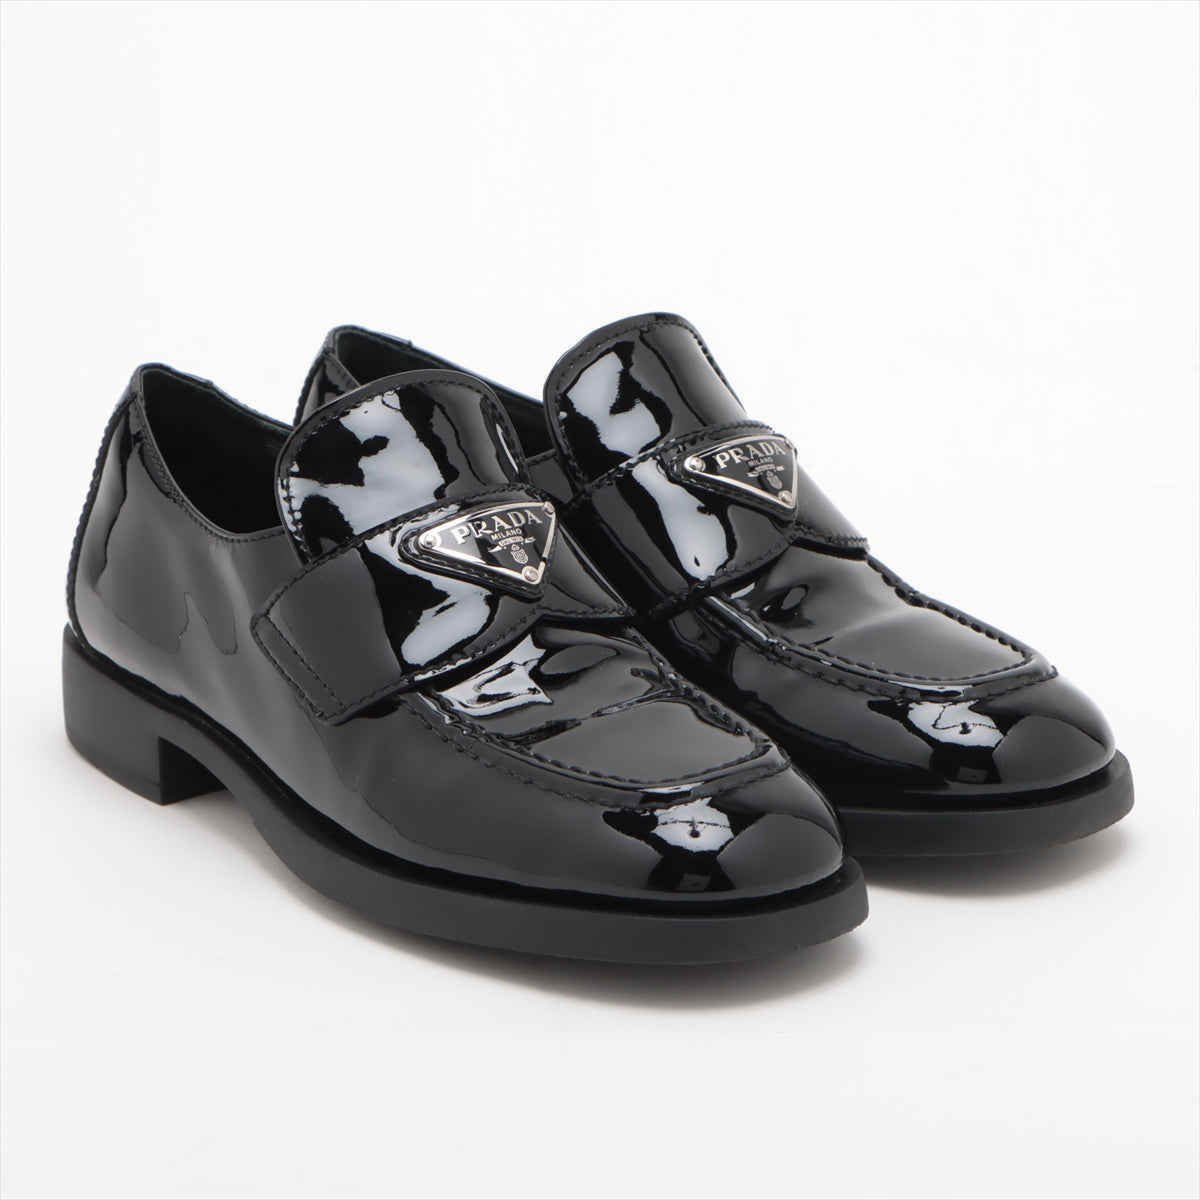 Prada Patent leather Loafer 36 Ladies' Black Triangle logo